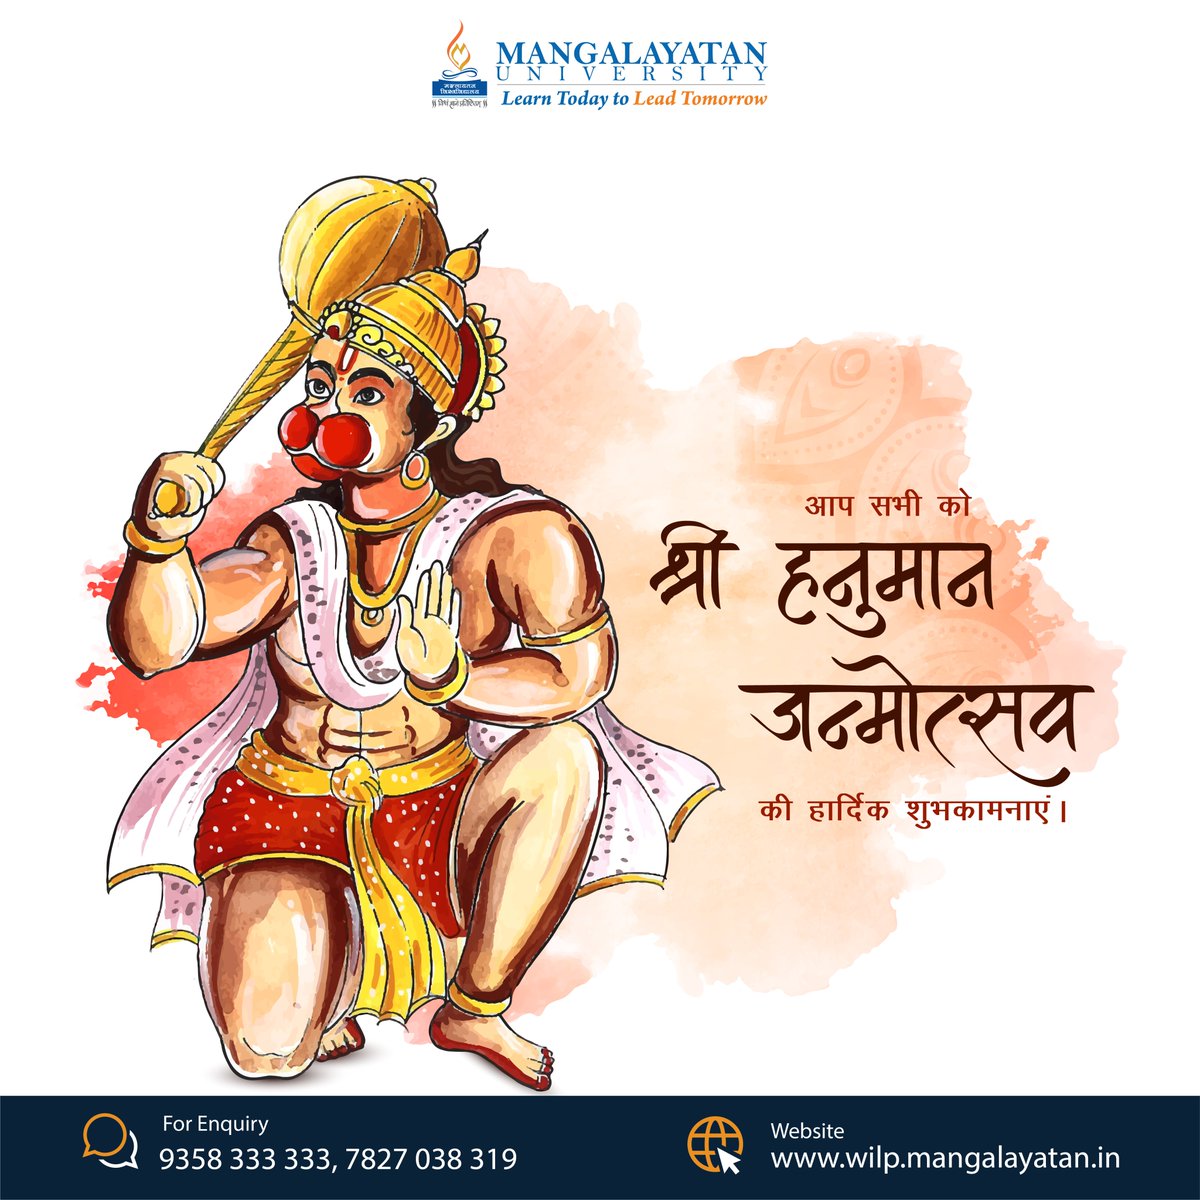 Wishing you a blessed #HanumanJayanti filled with strength, courage, and devotion. #mangalayatanuniversity #mualigarh